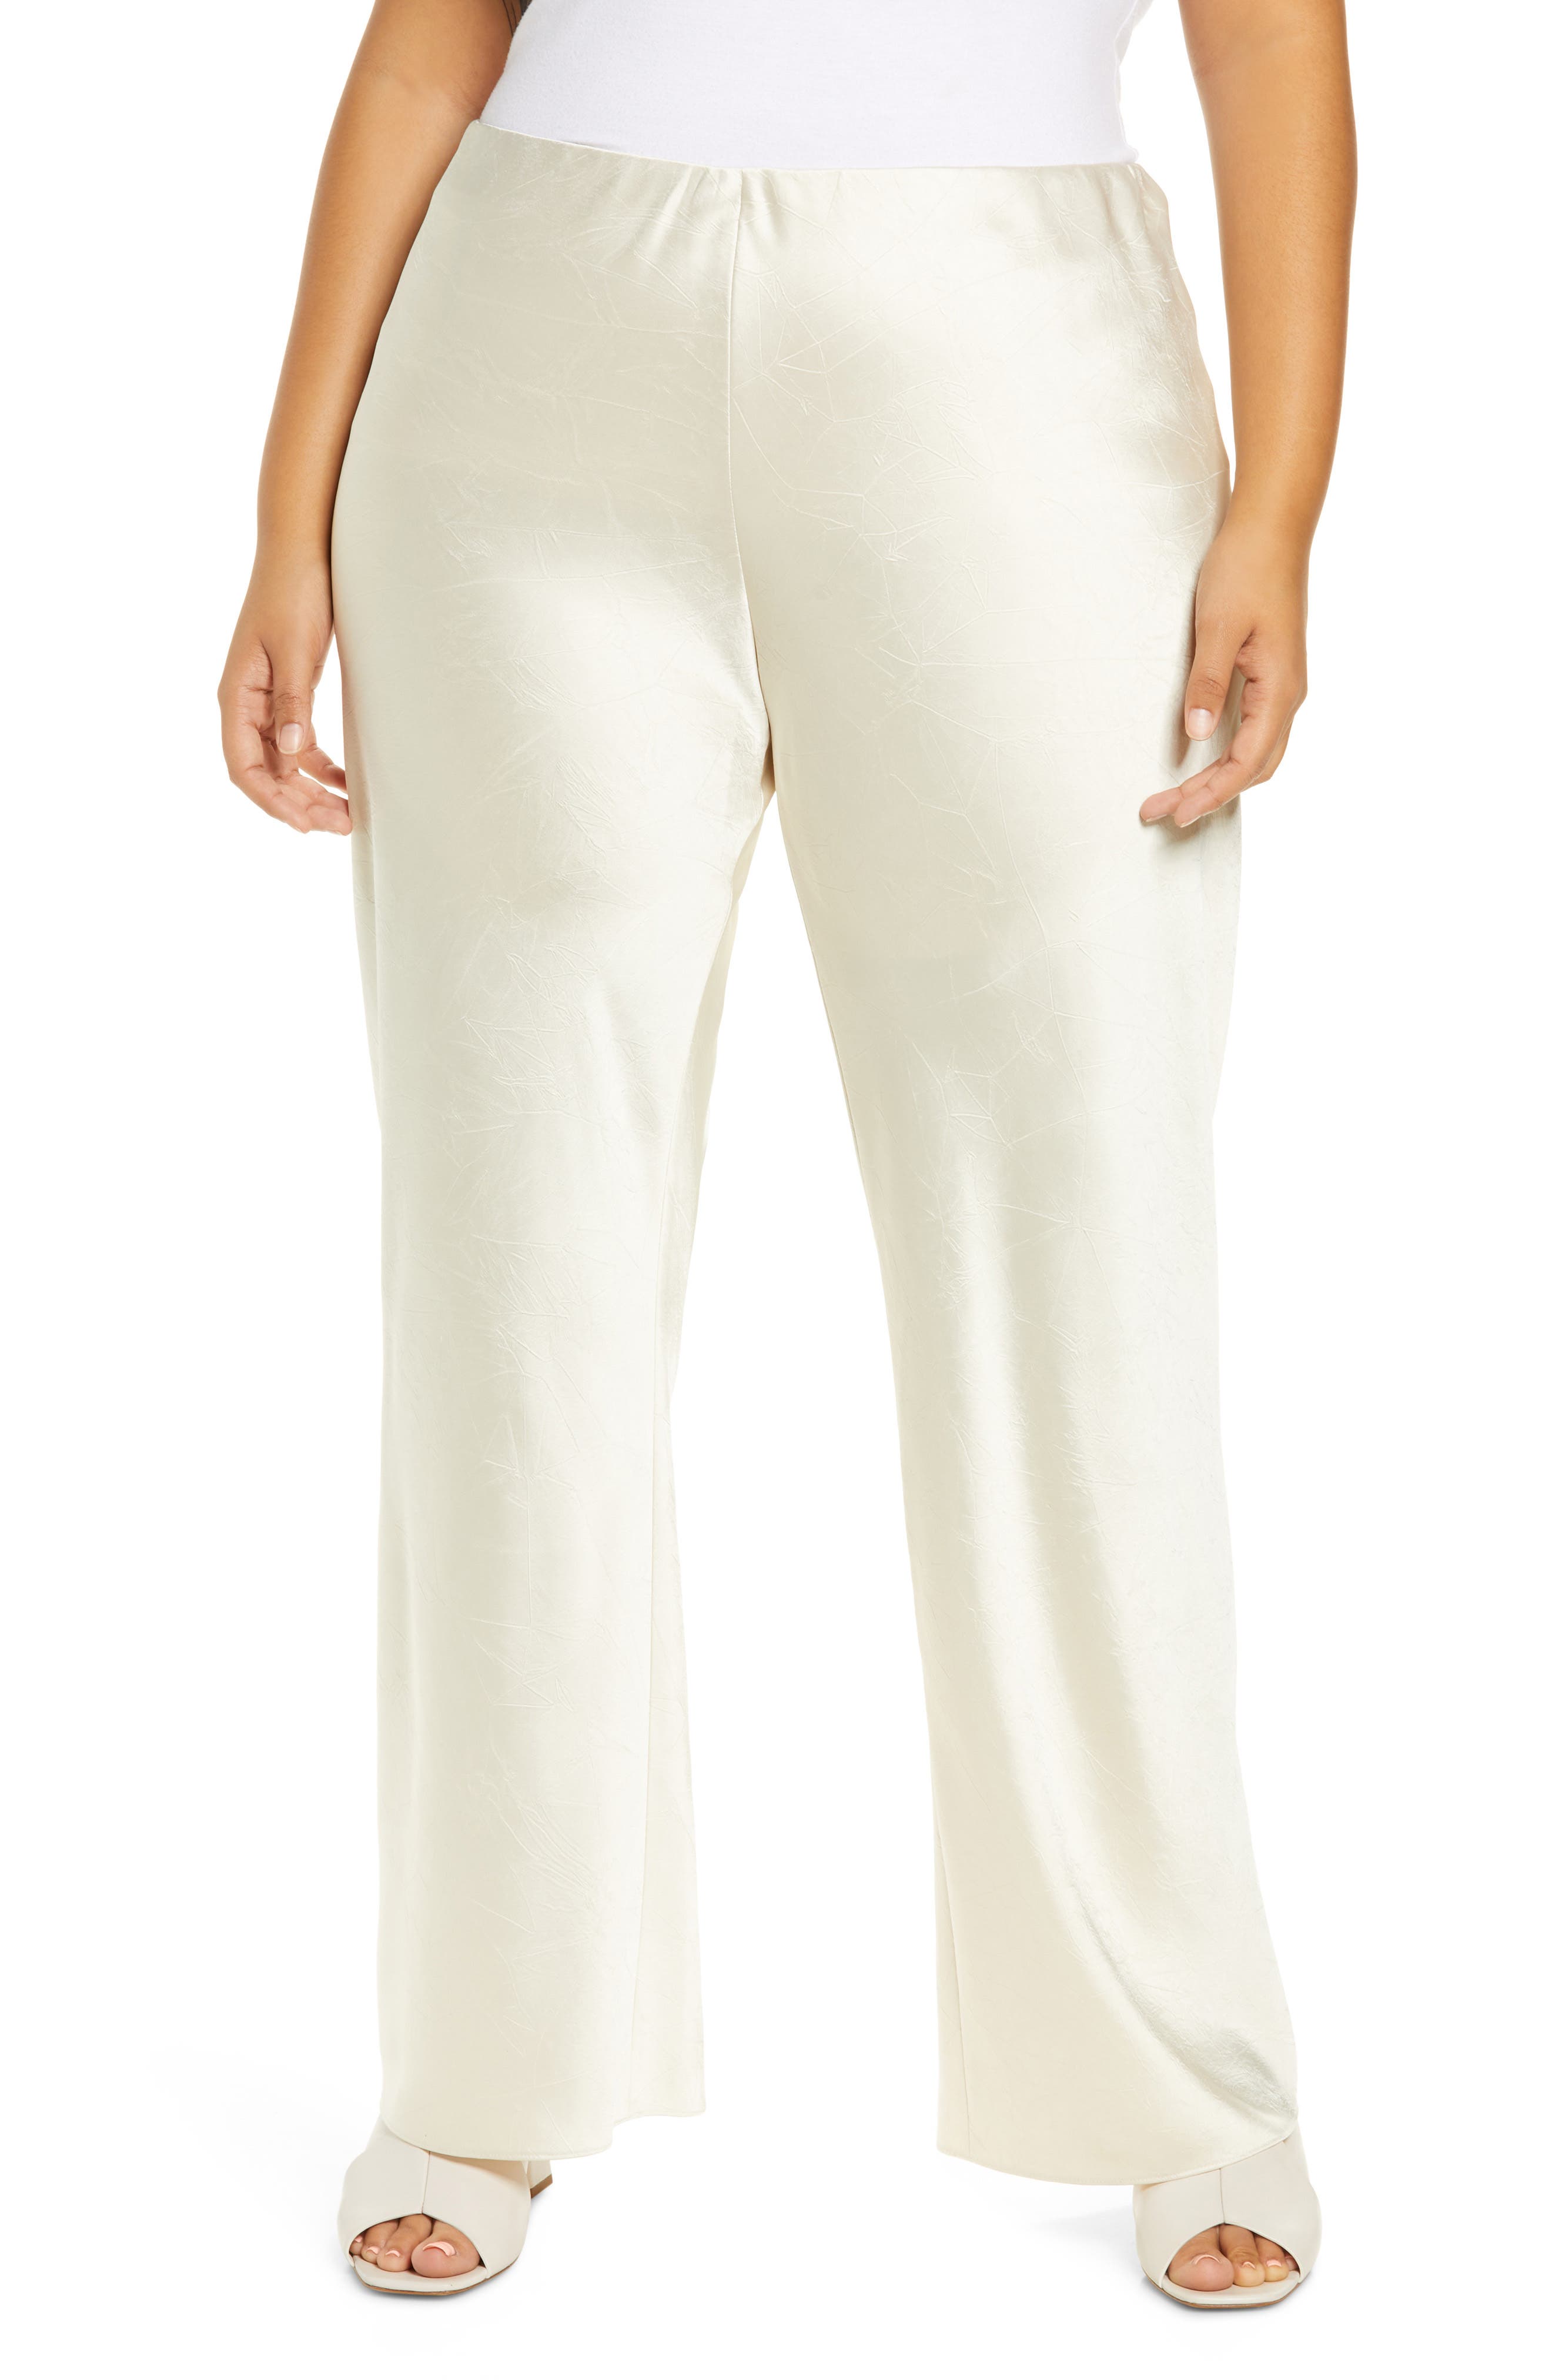 White Plus-Size Pants ☀ Leggings ...